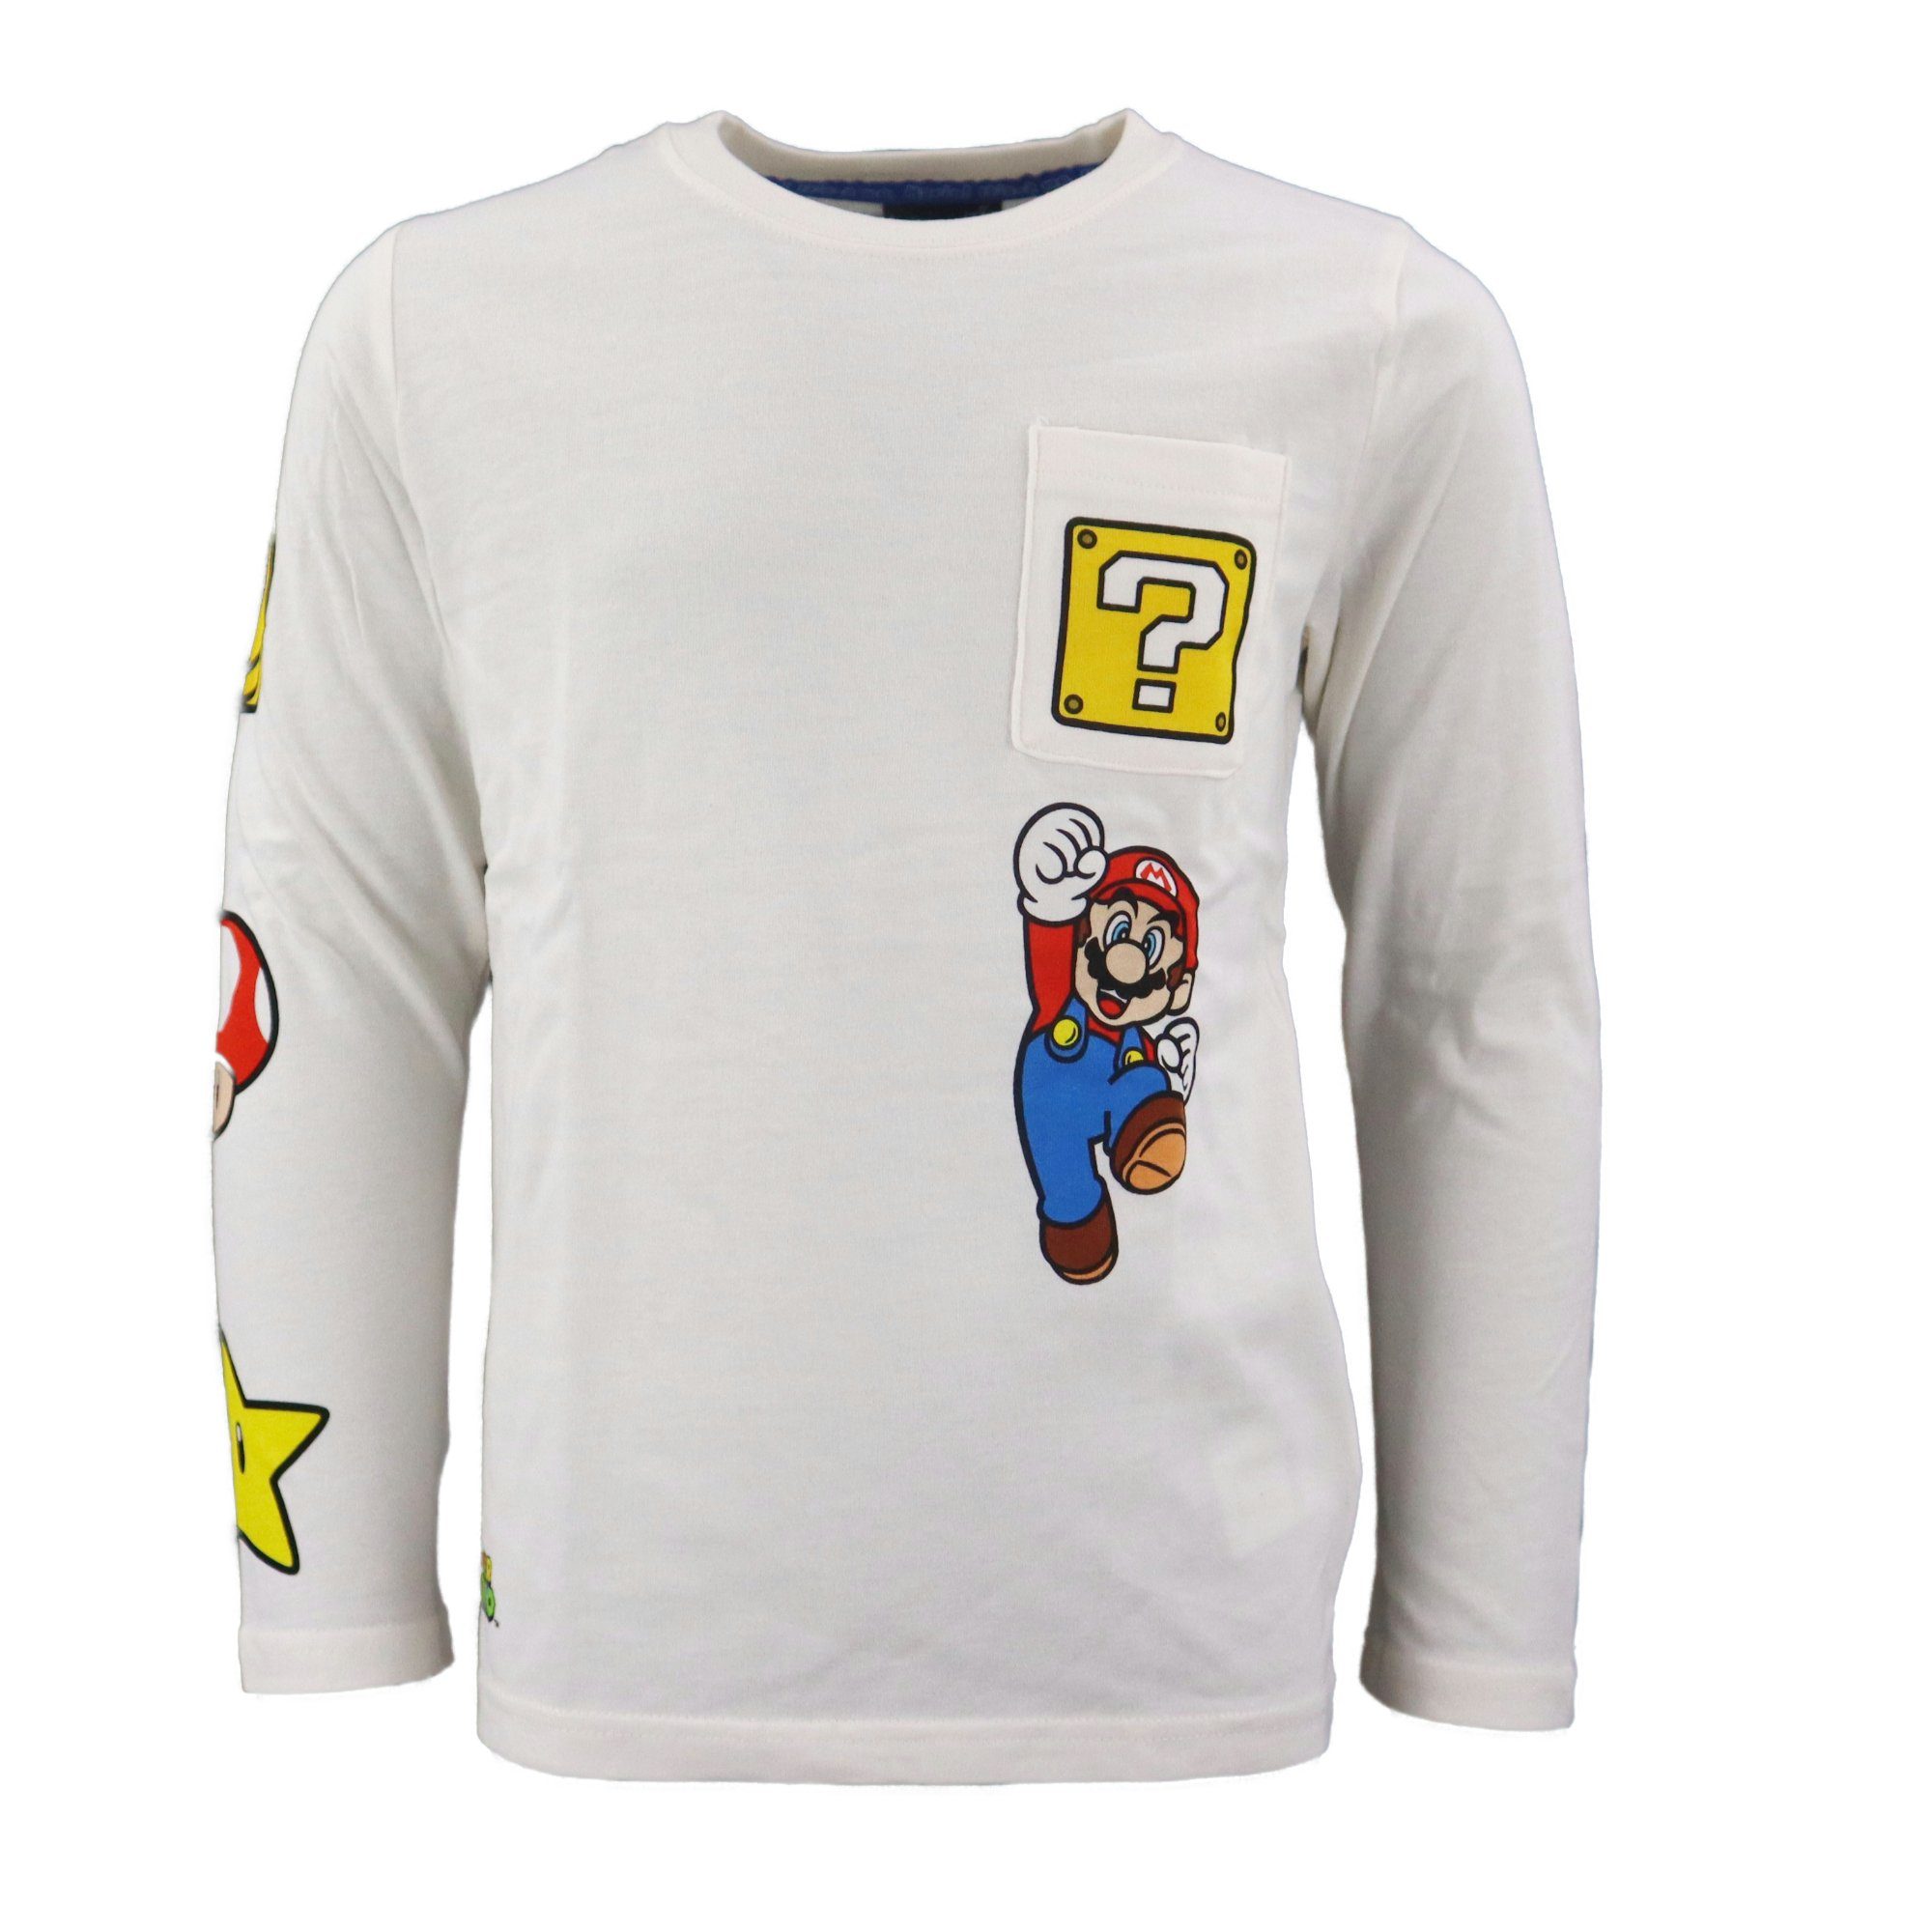 Super Mario Langarmshirt Super Mario Jungen Kinder langarm Shirt Gr. 110  bis 152, Baumwolle